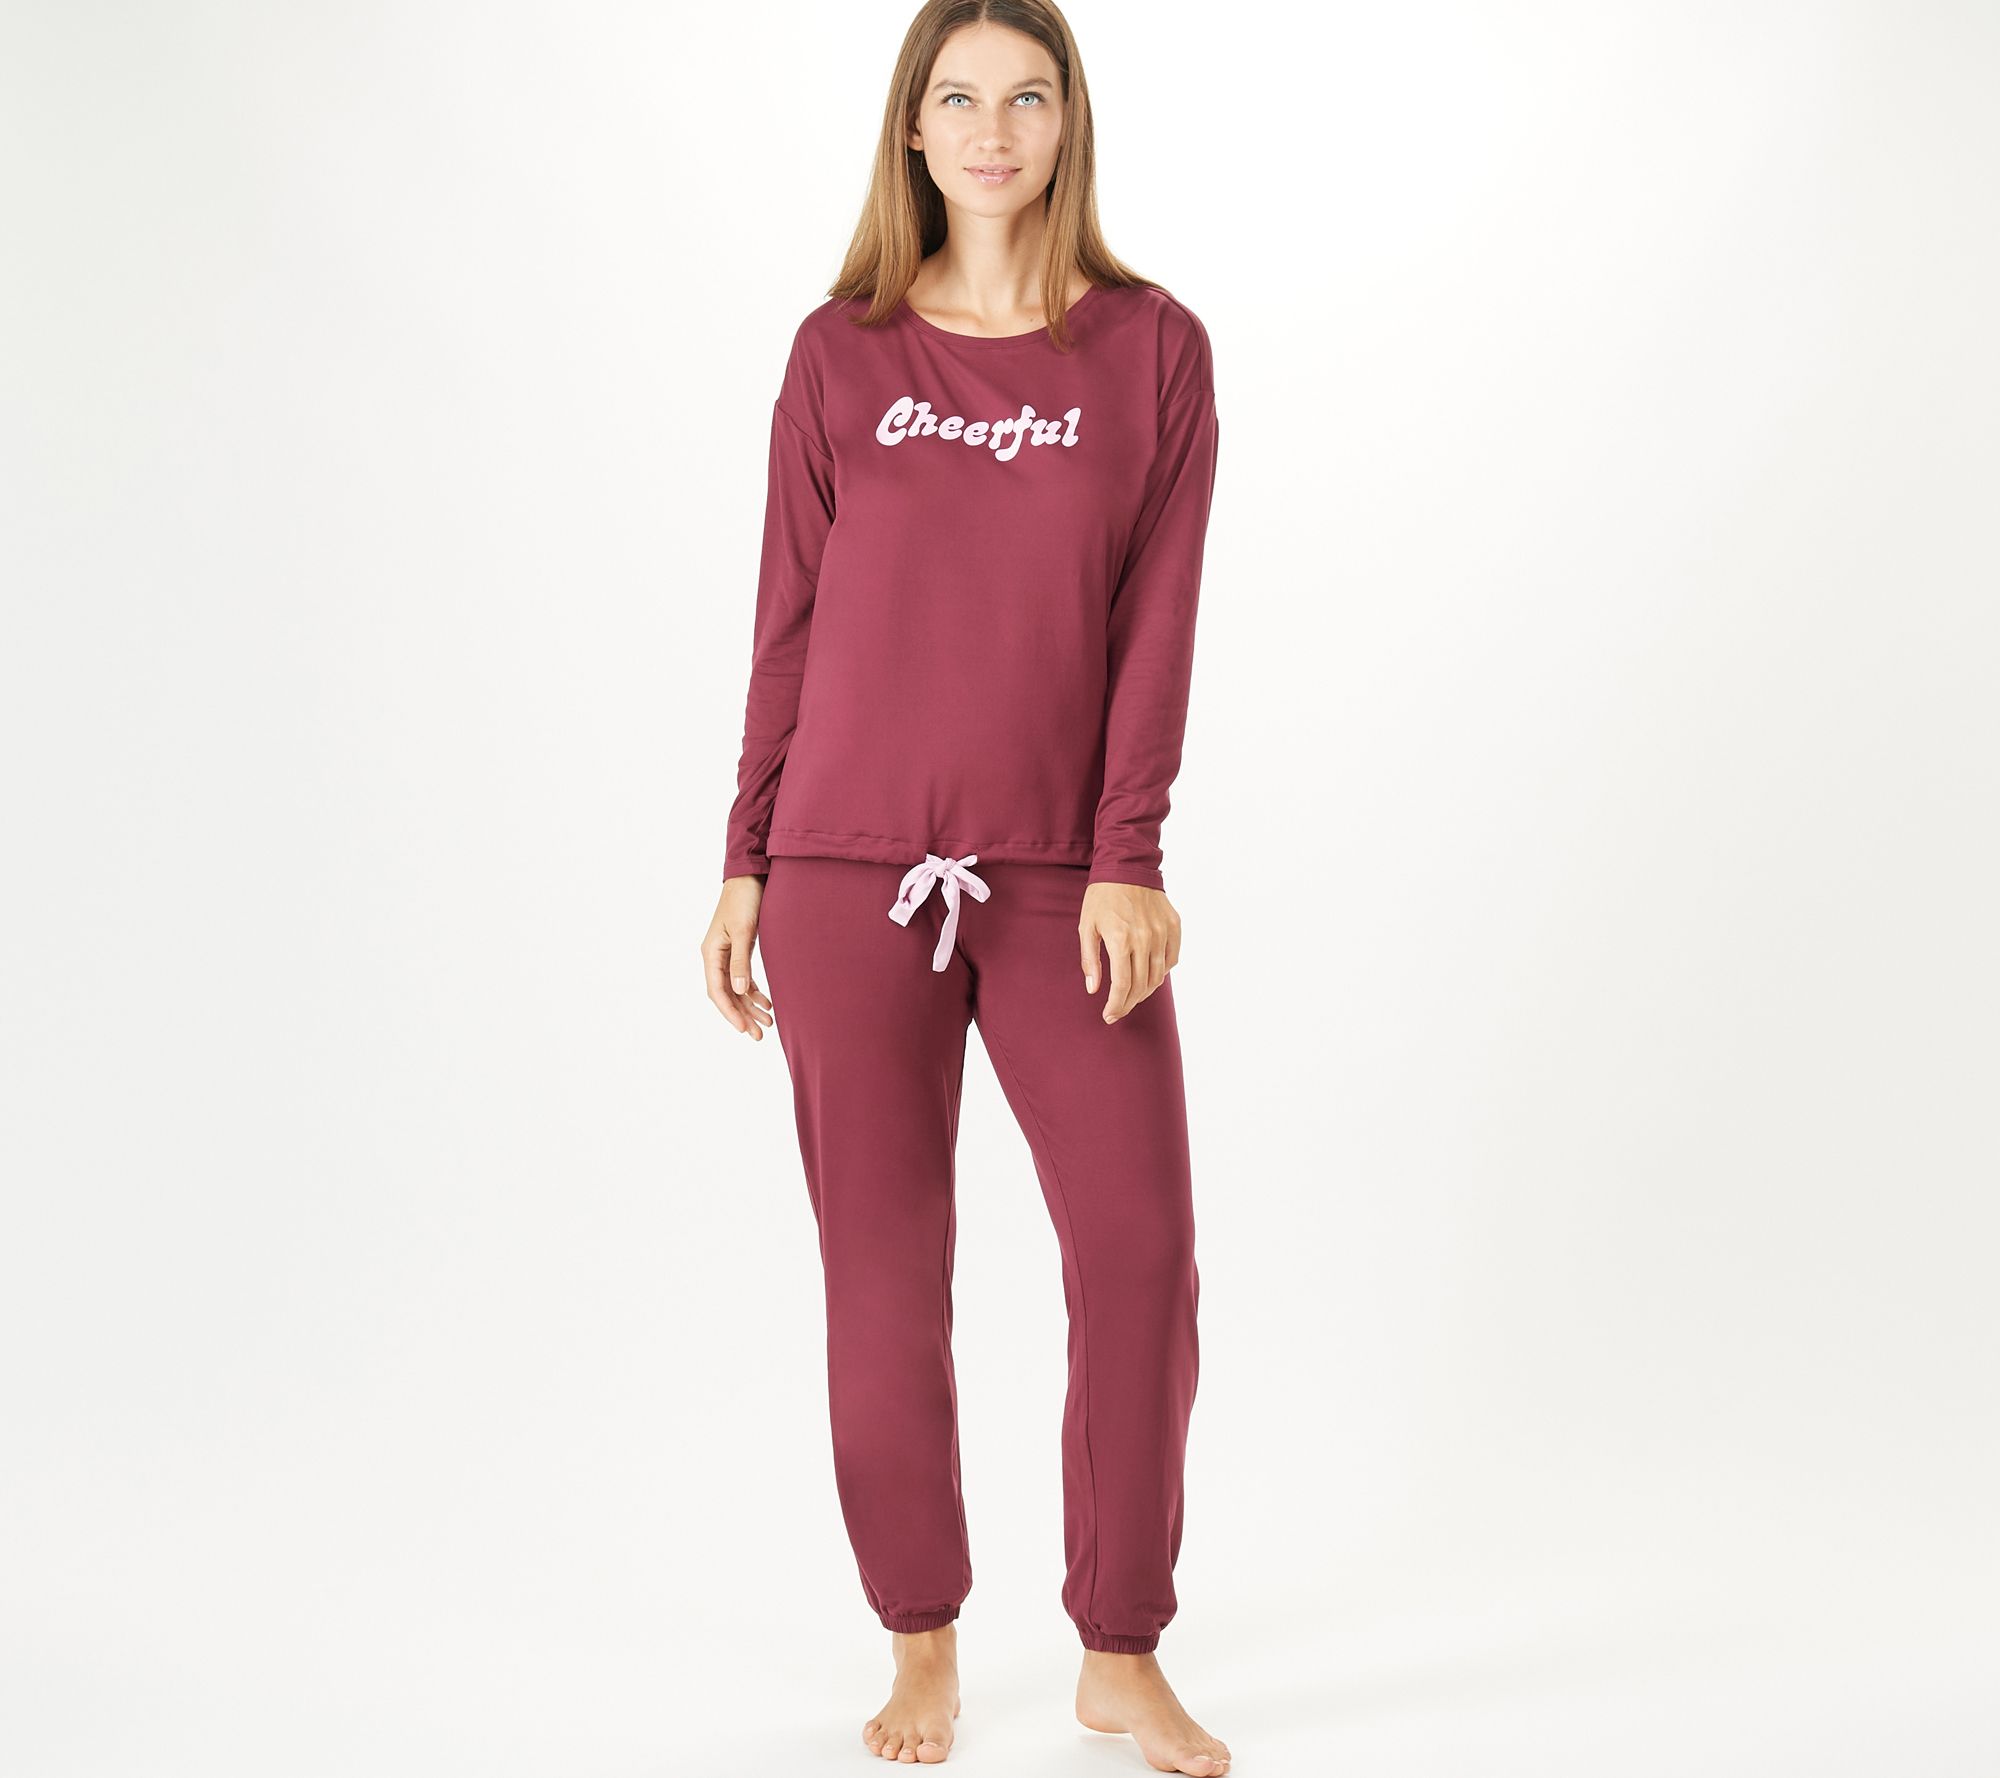 AnyBody Sleep Regular Brushed Jersey Printed 2-Piece Pajama Set